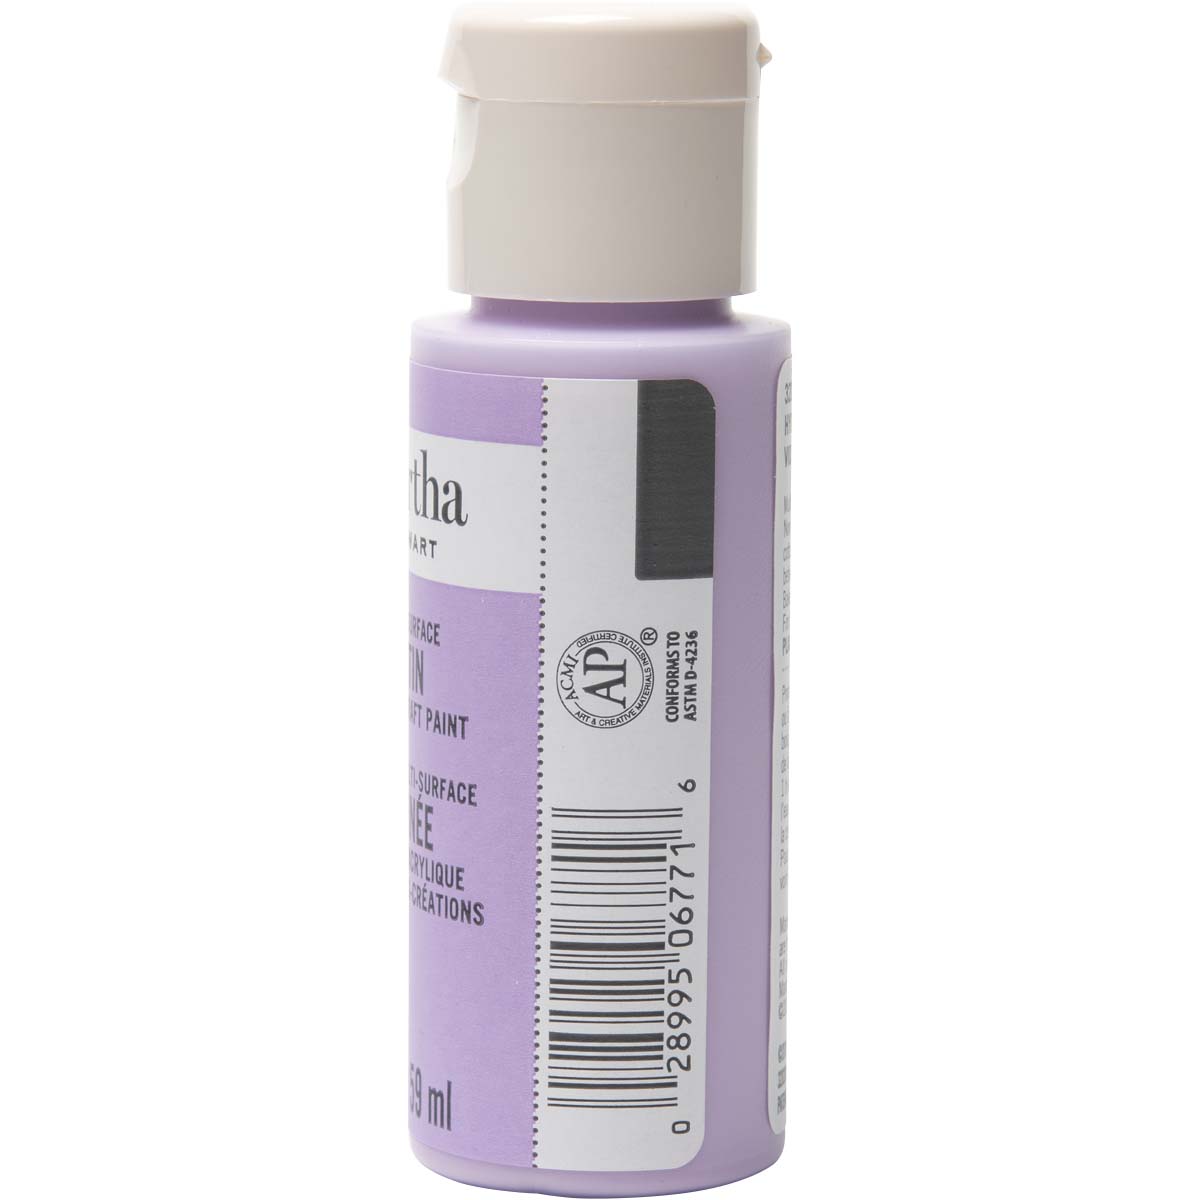 Martha Stewart ® Multi-Surface Satin Acrylic Craft Paint - Hydrangea Purple, 2 oz. - 32028CA